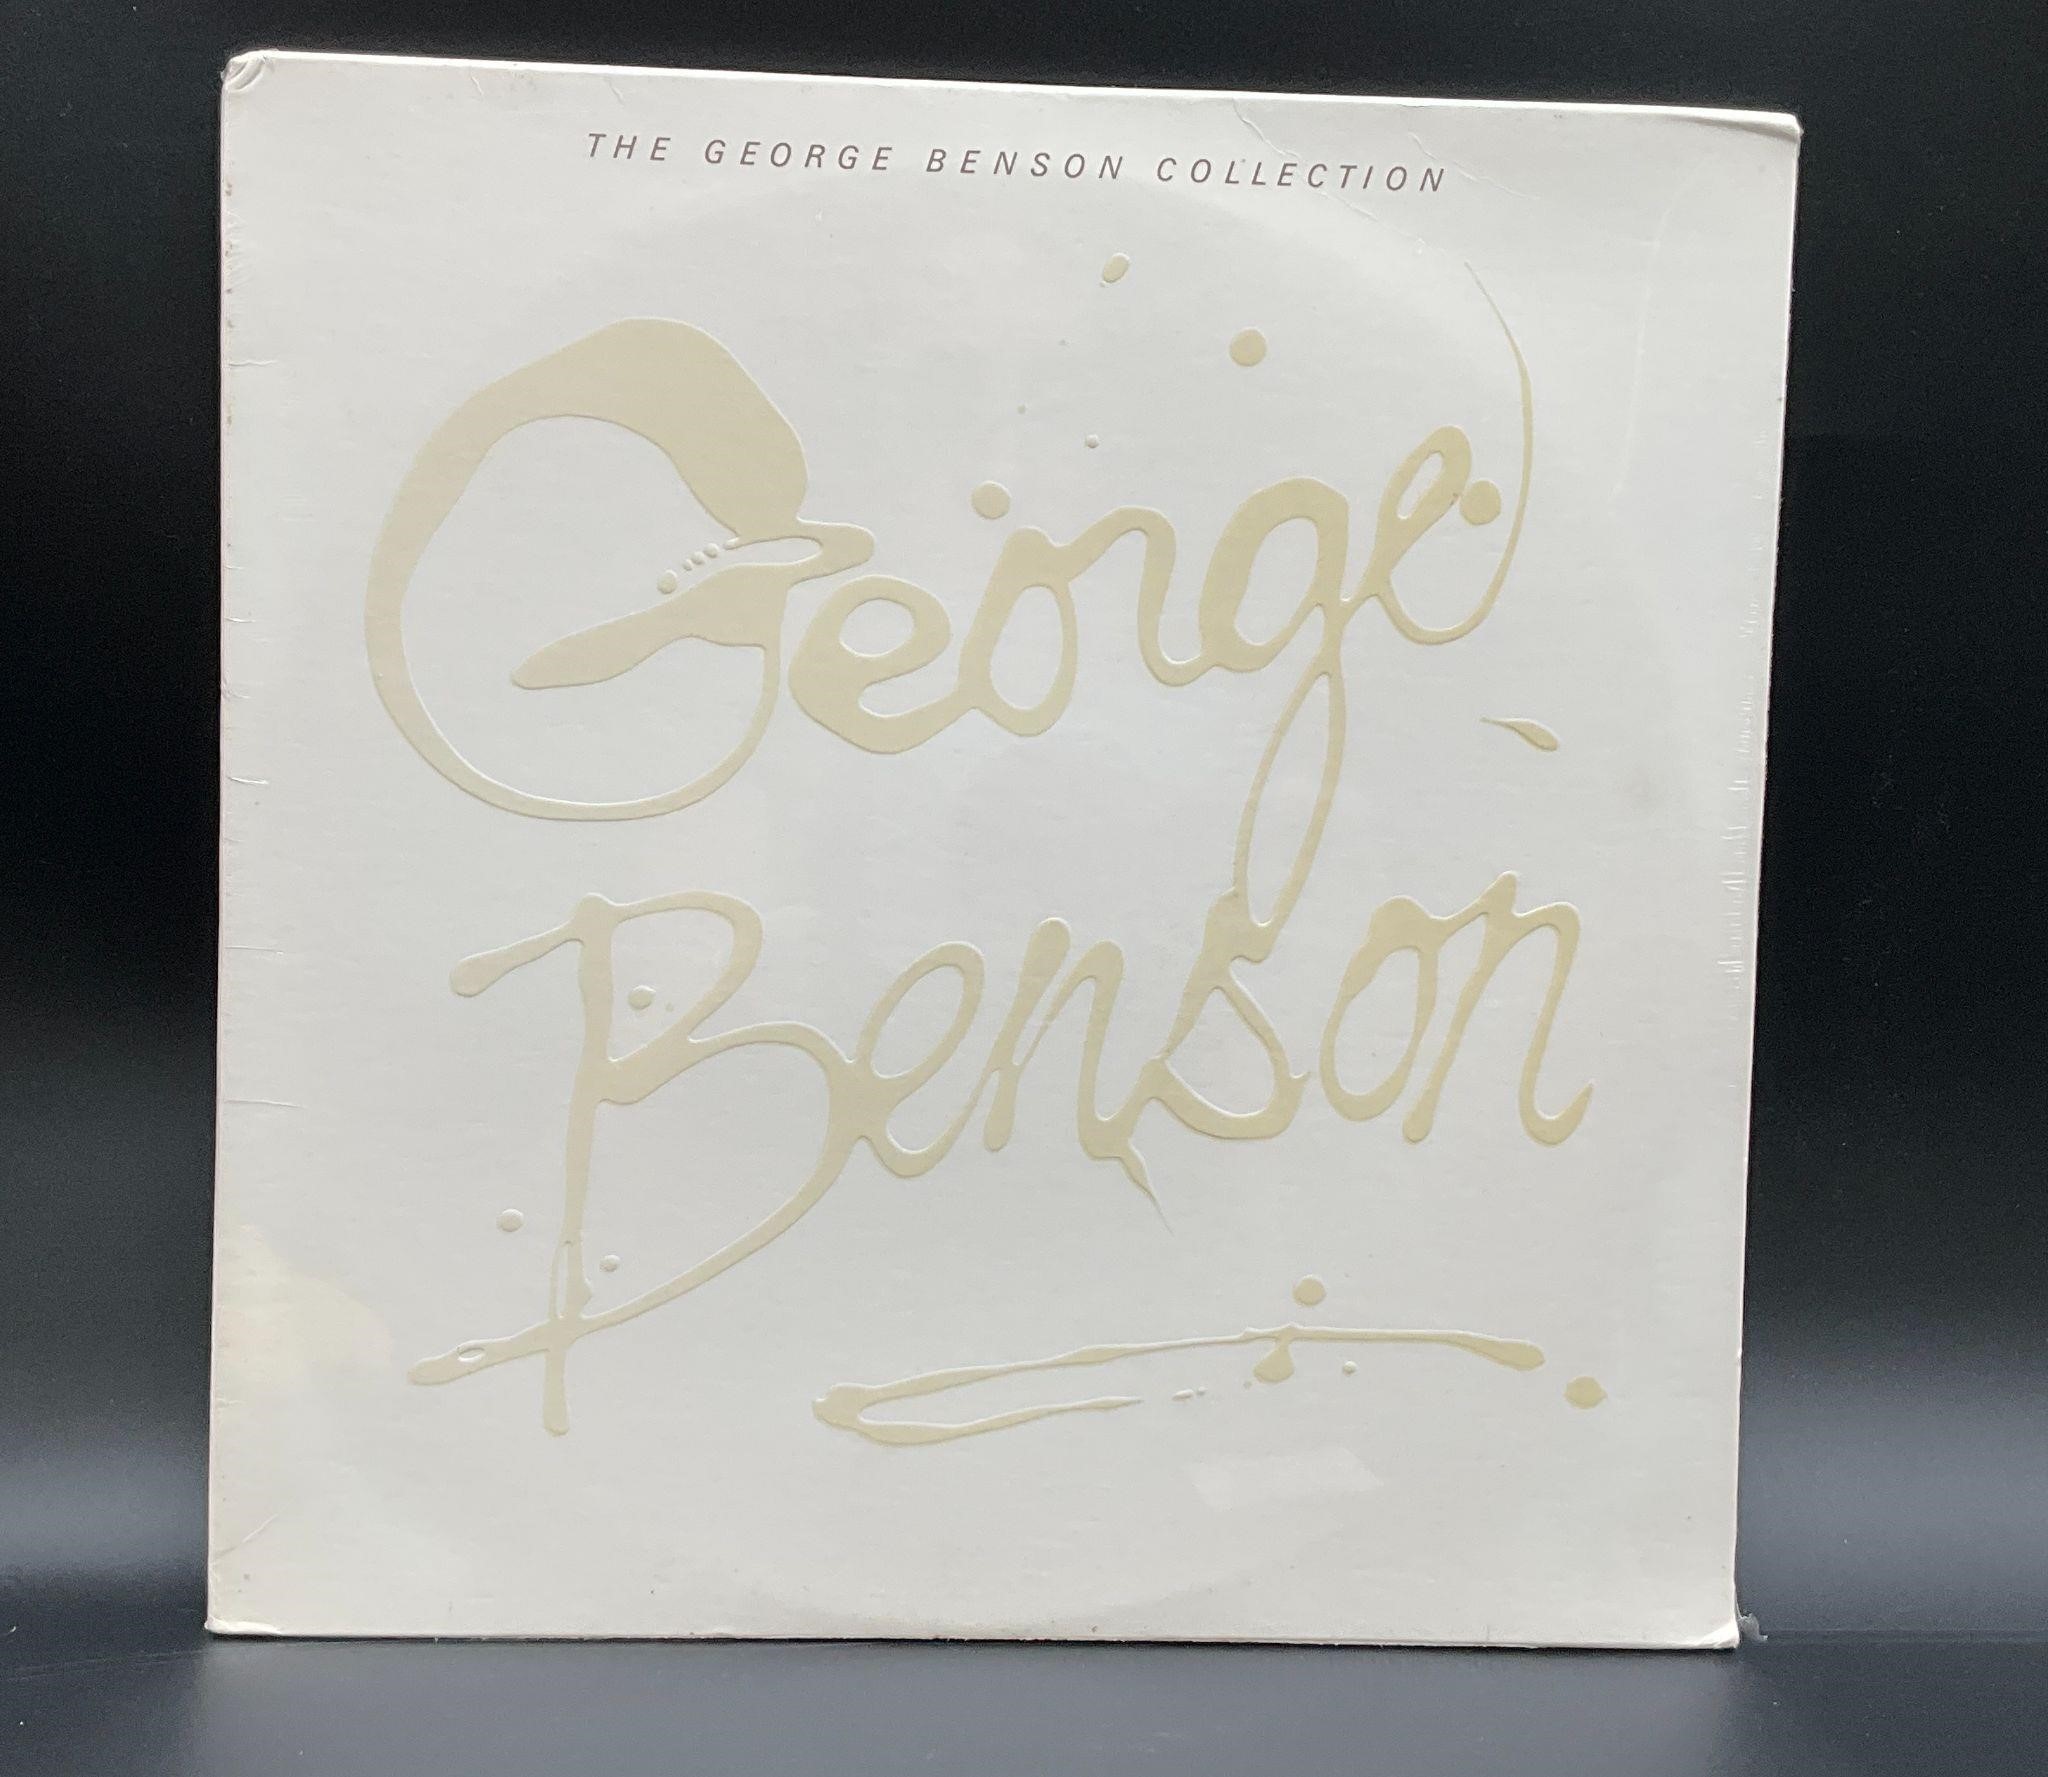 Sealed Original 1981 "George Benson Collection" LP